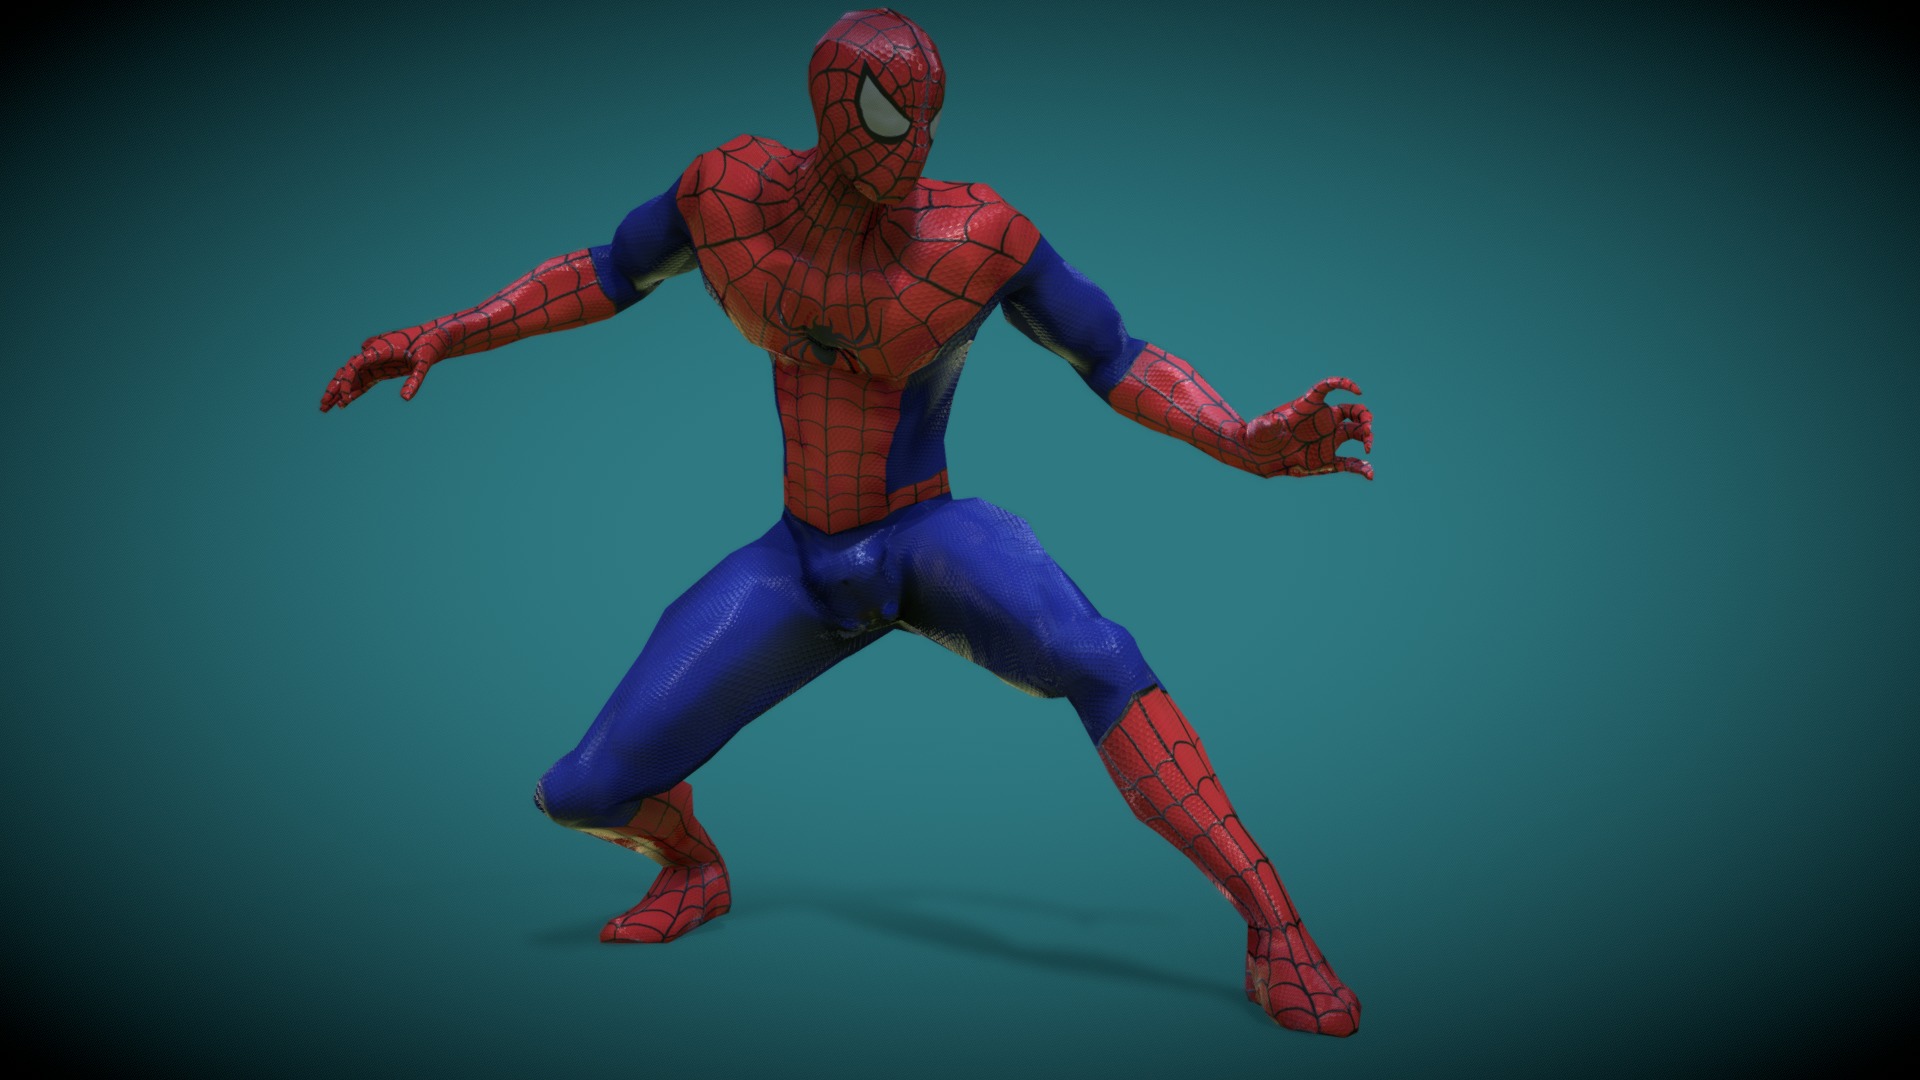 Spiderman animation test - SPIDERMAN - 3D model by Miguel Valverde (@miguelvalverde) 3d model